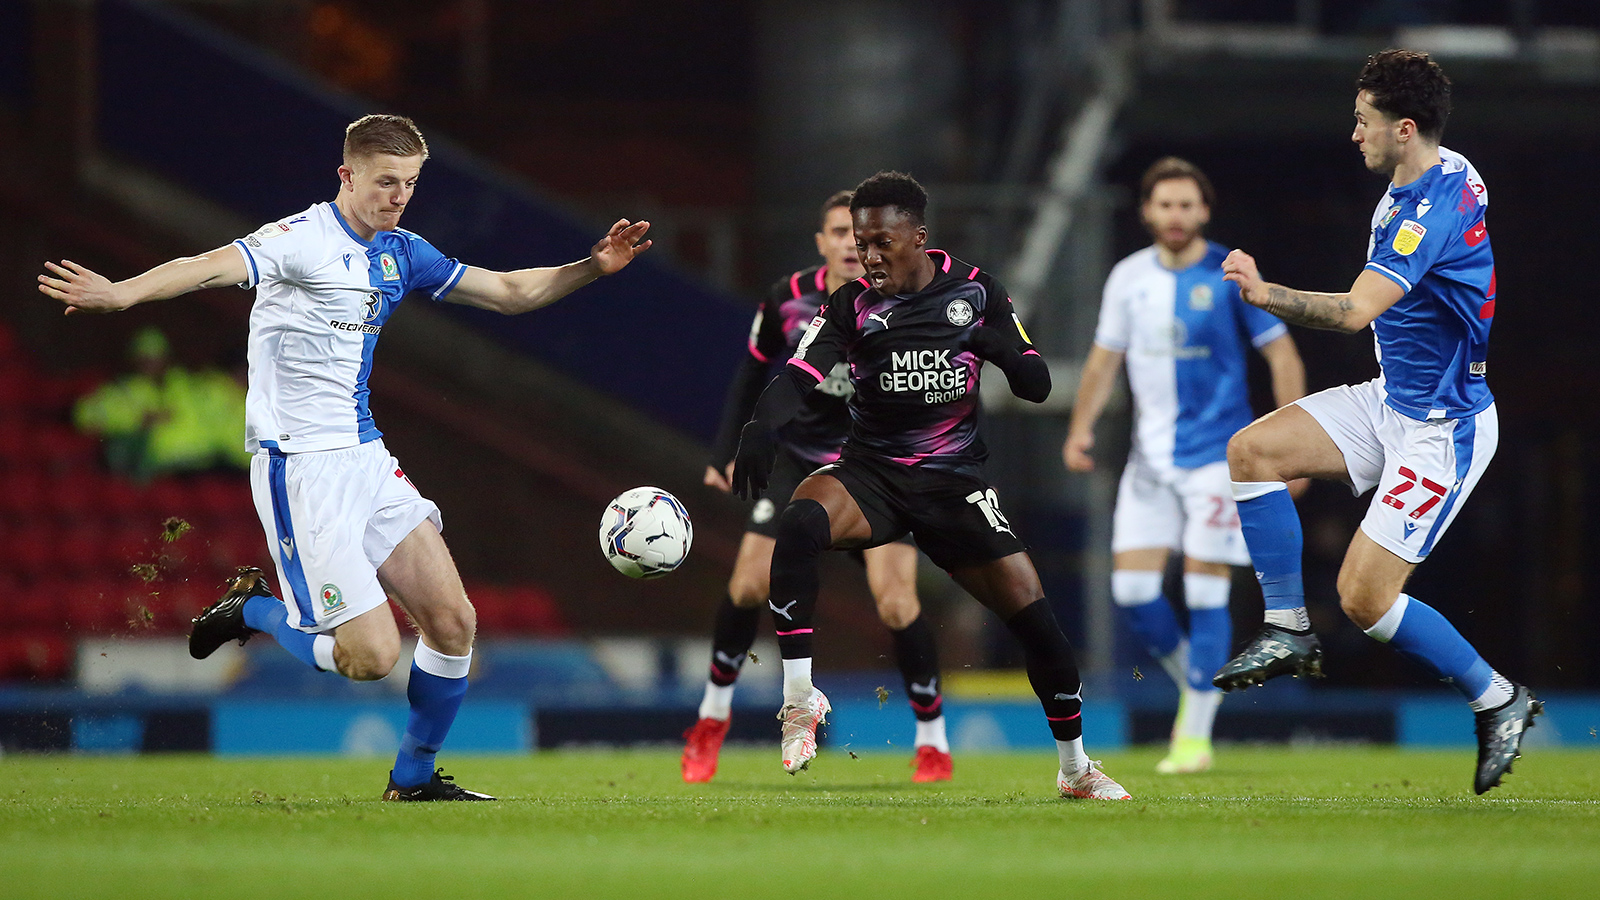 Siriki Dembele in action against Blackburn Rovers